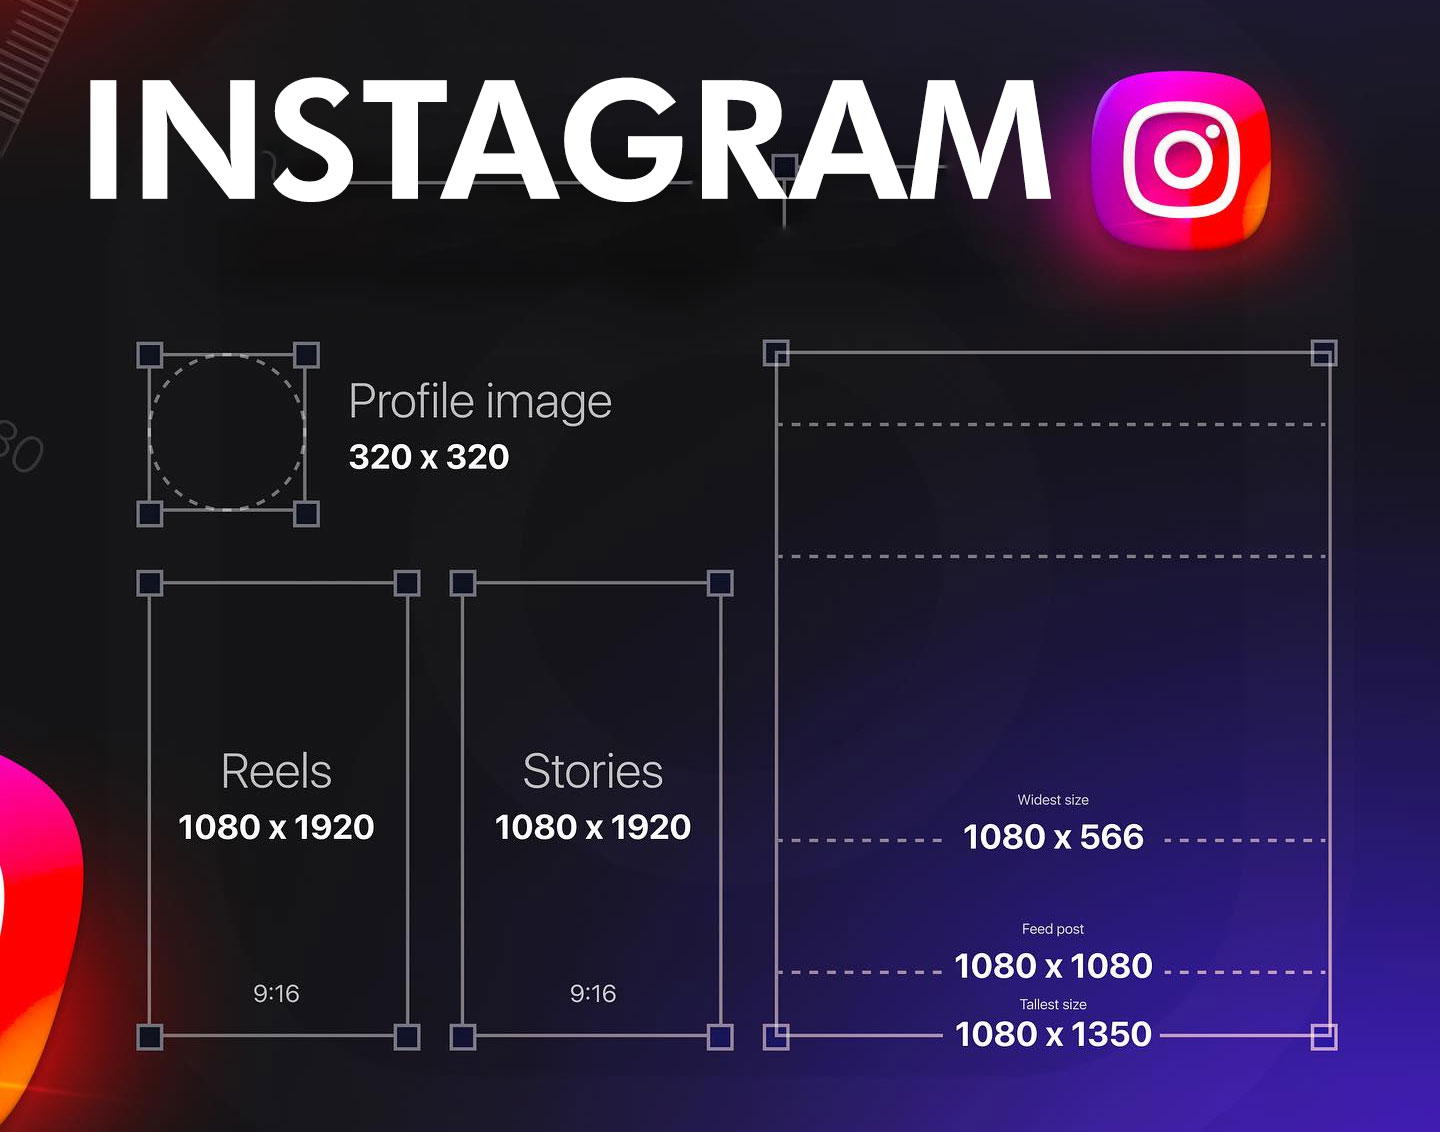 Right image sizes for social media platforms